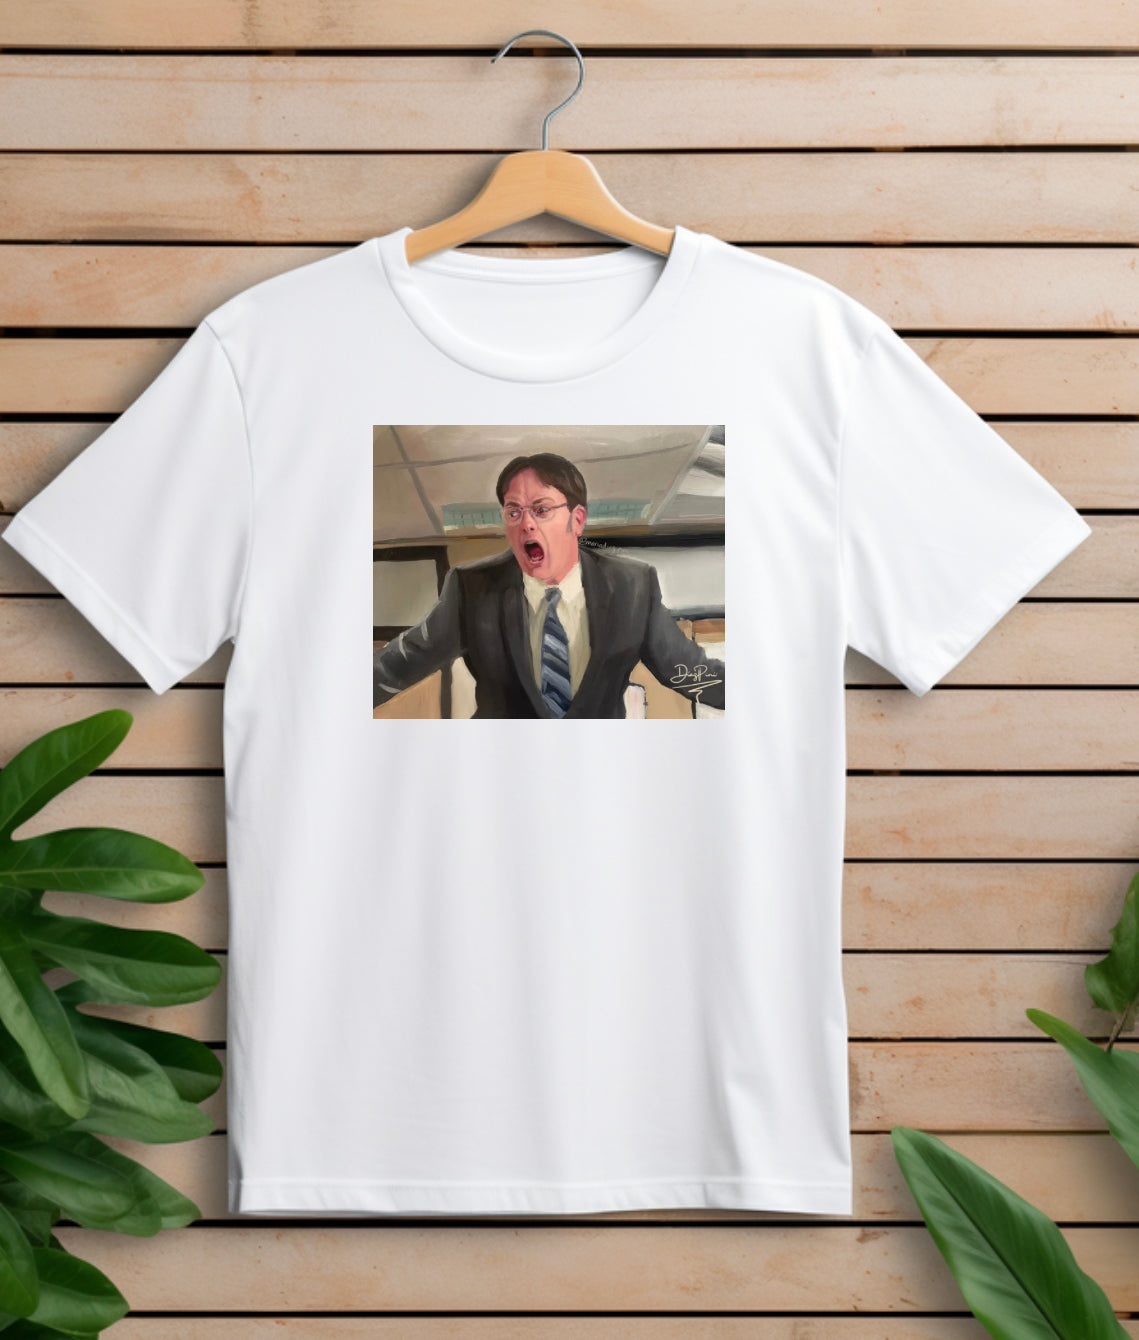 Dwight The Office T-Shirt